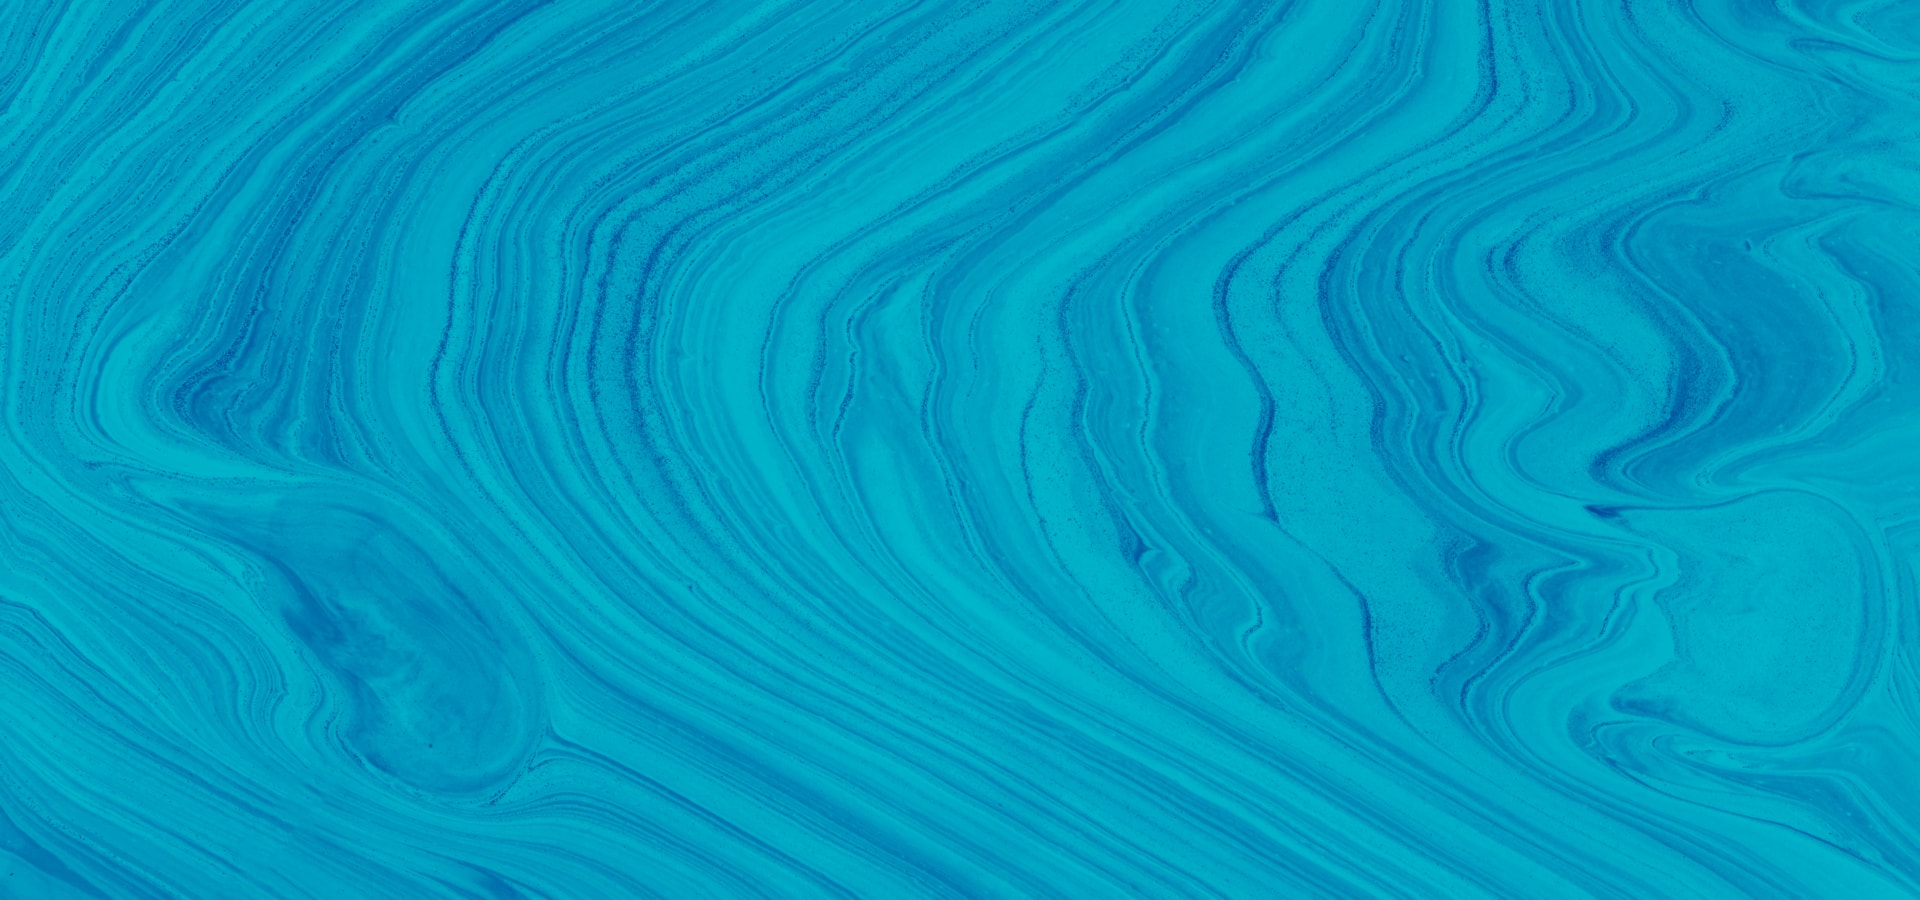 Fluid background